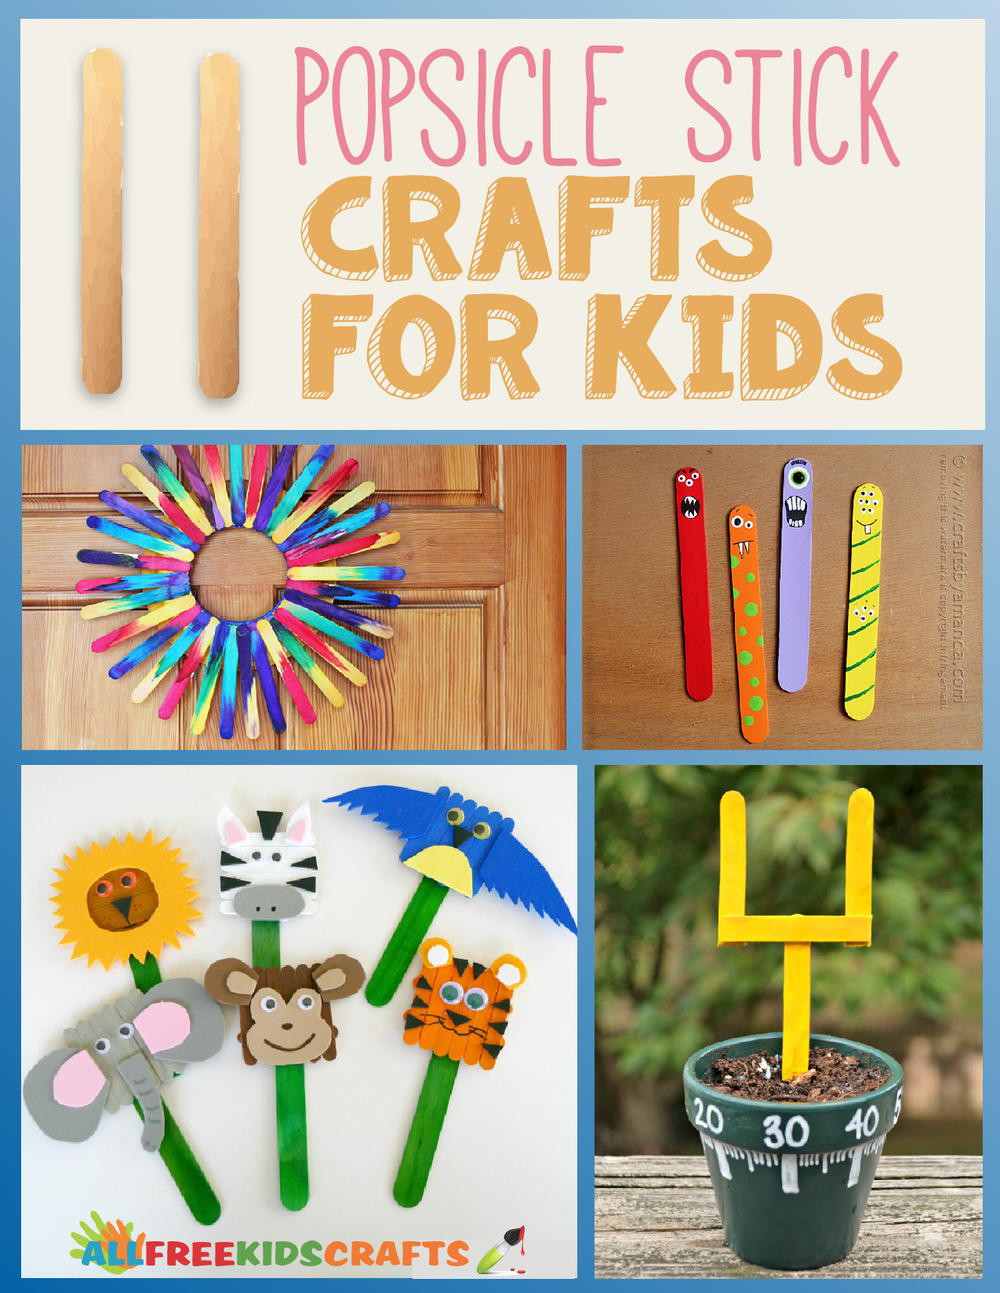 Popsicle Stick Crafts For Kids
 11 Popsicle Stick Crafts for Kids